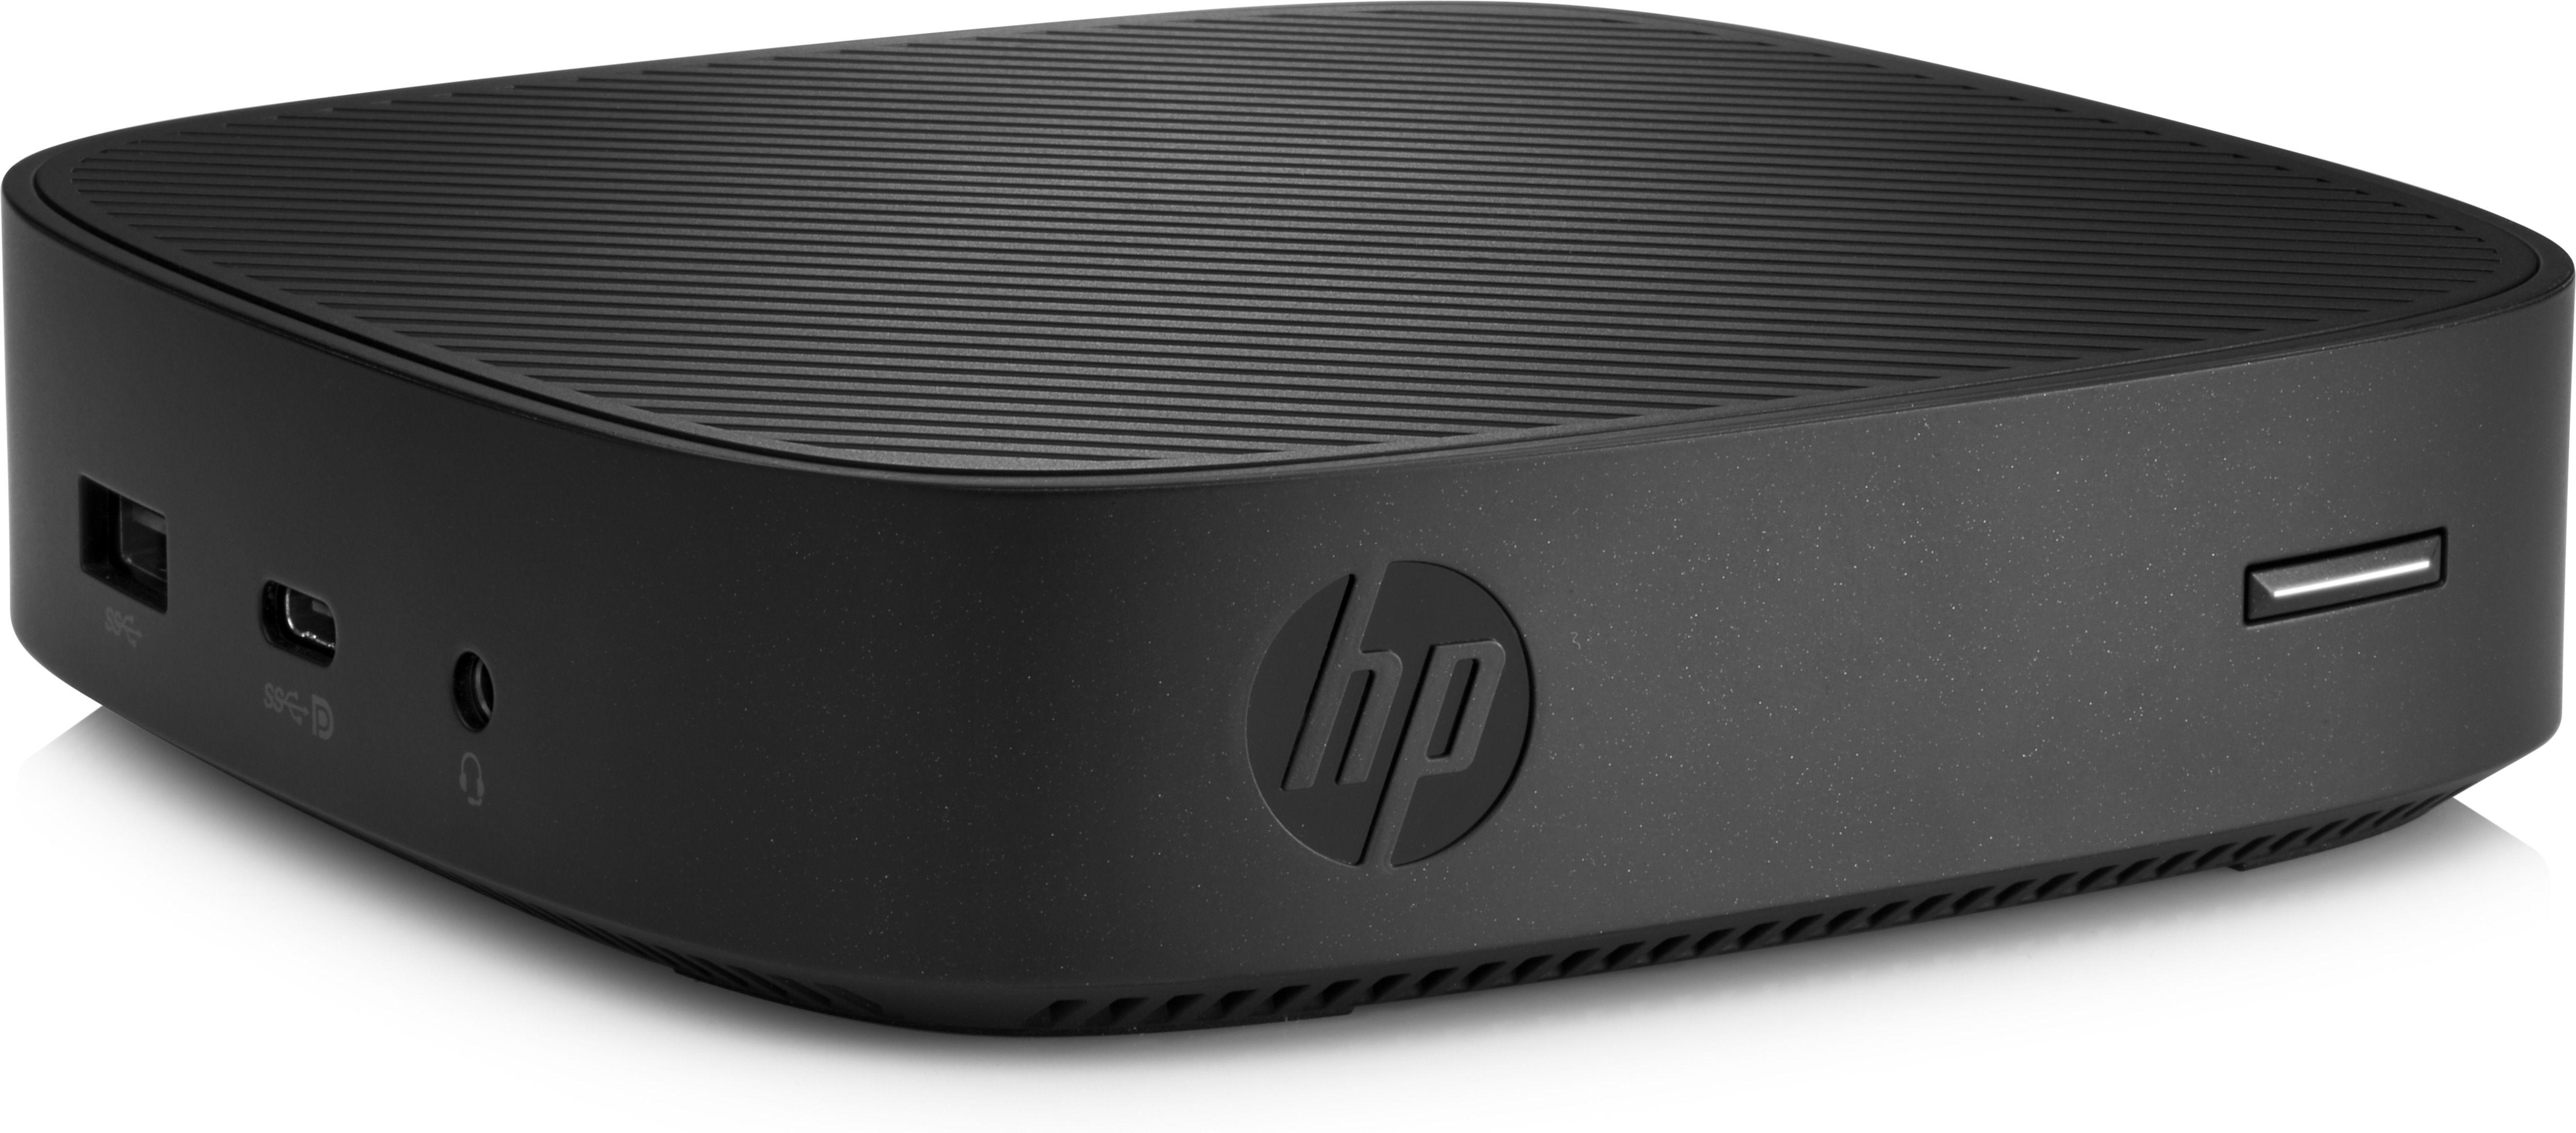 HP t430 1,1 GHz Windows 10 IoT Enterprise 740 g Noir N4020